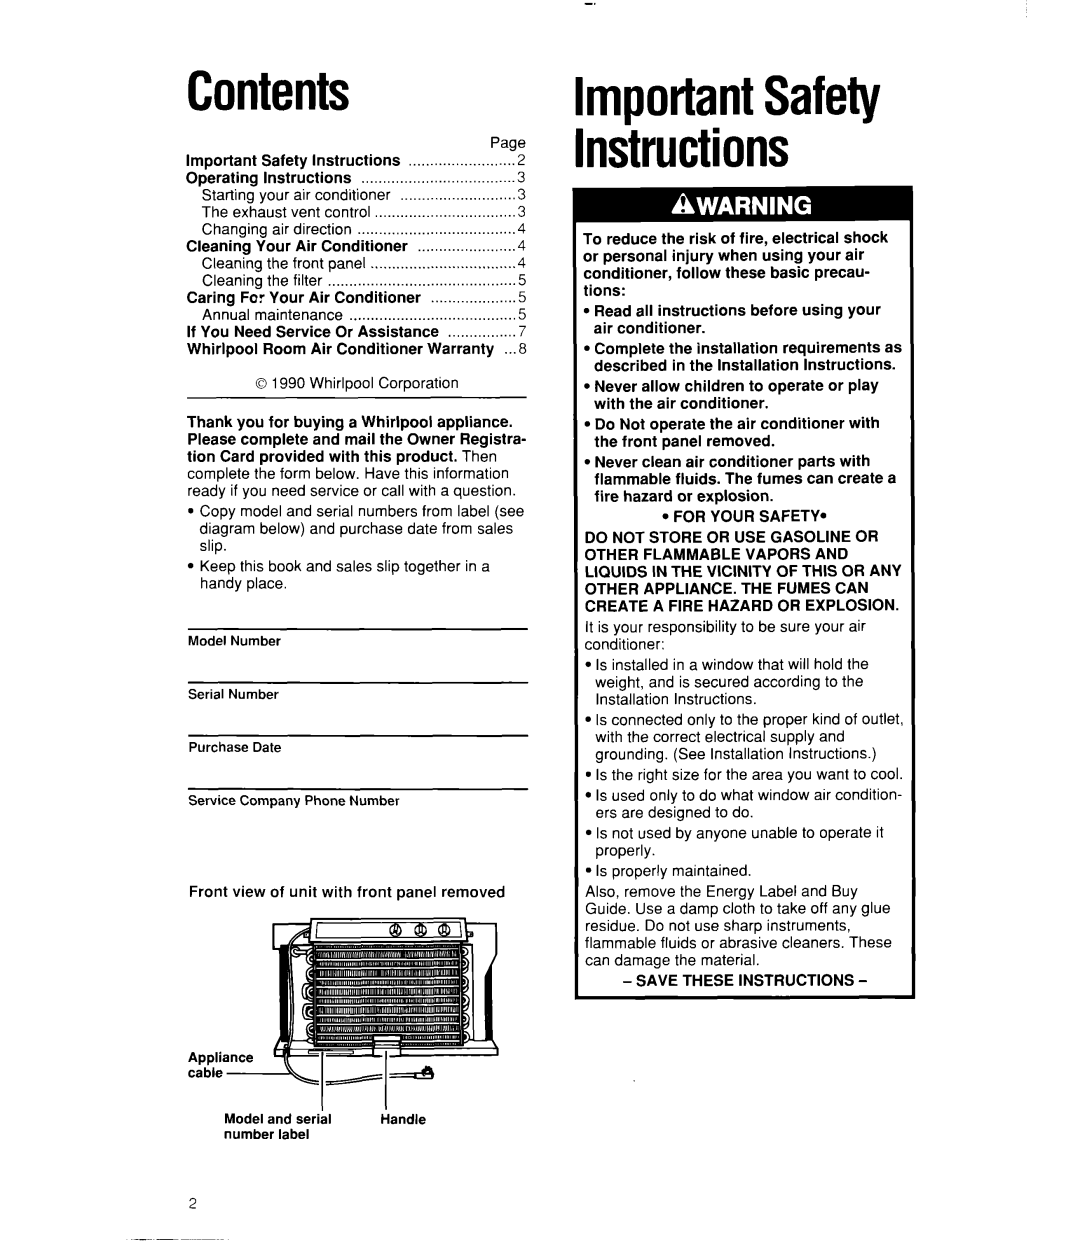 Whirlpool ACQ082, ACQ102, ACQ122, ACU124, ACU102, ACU082 manual Contents, ImportantSafety Instructions 